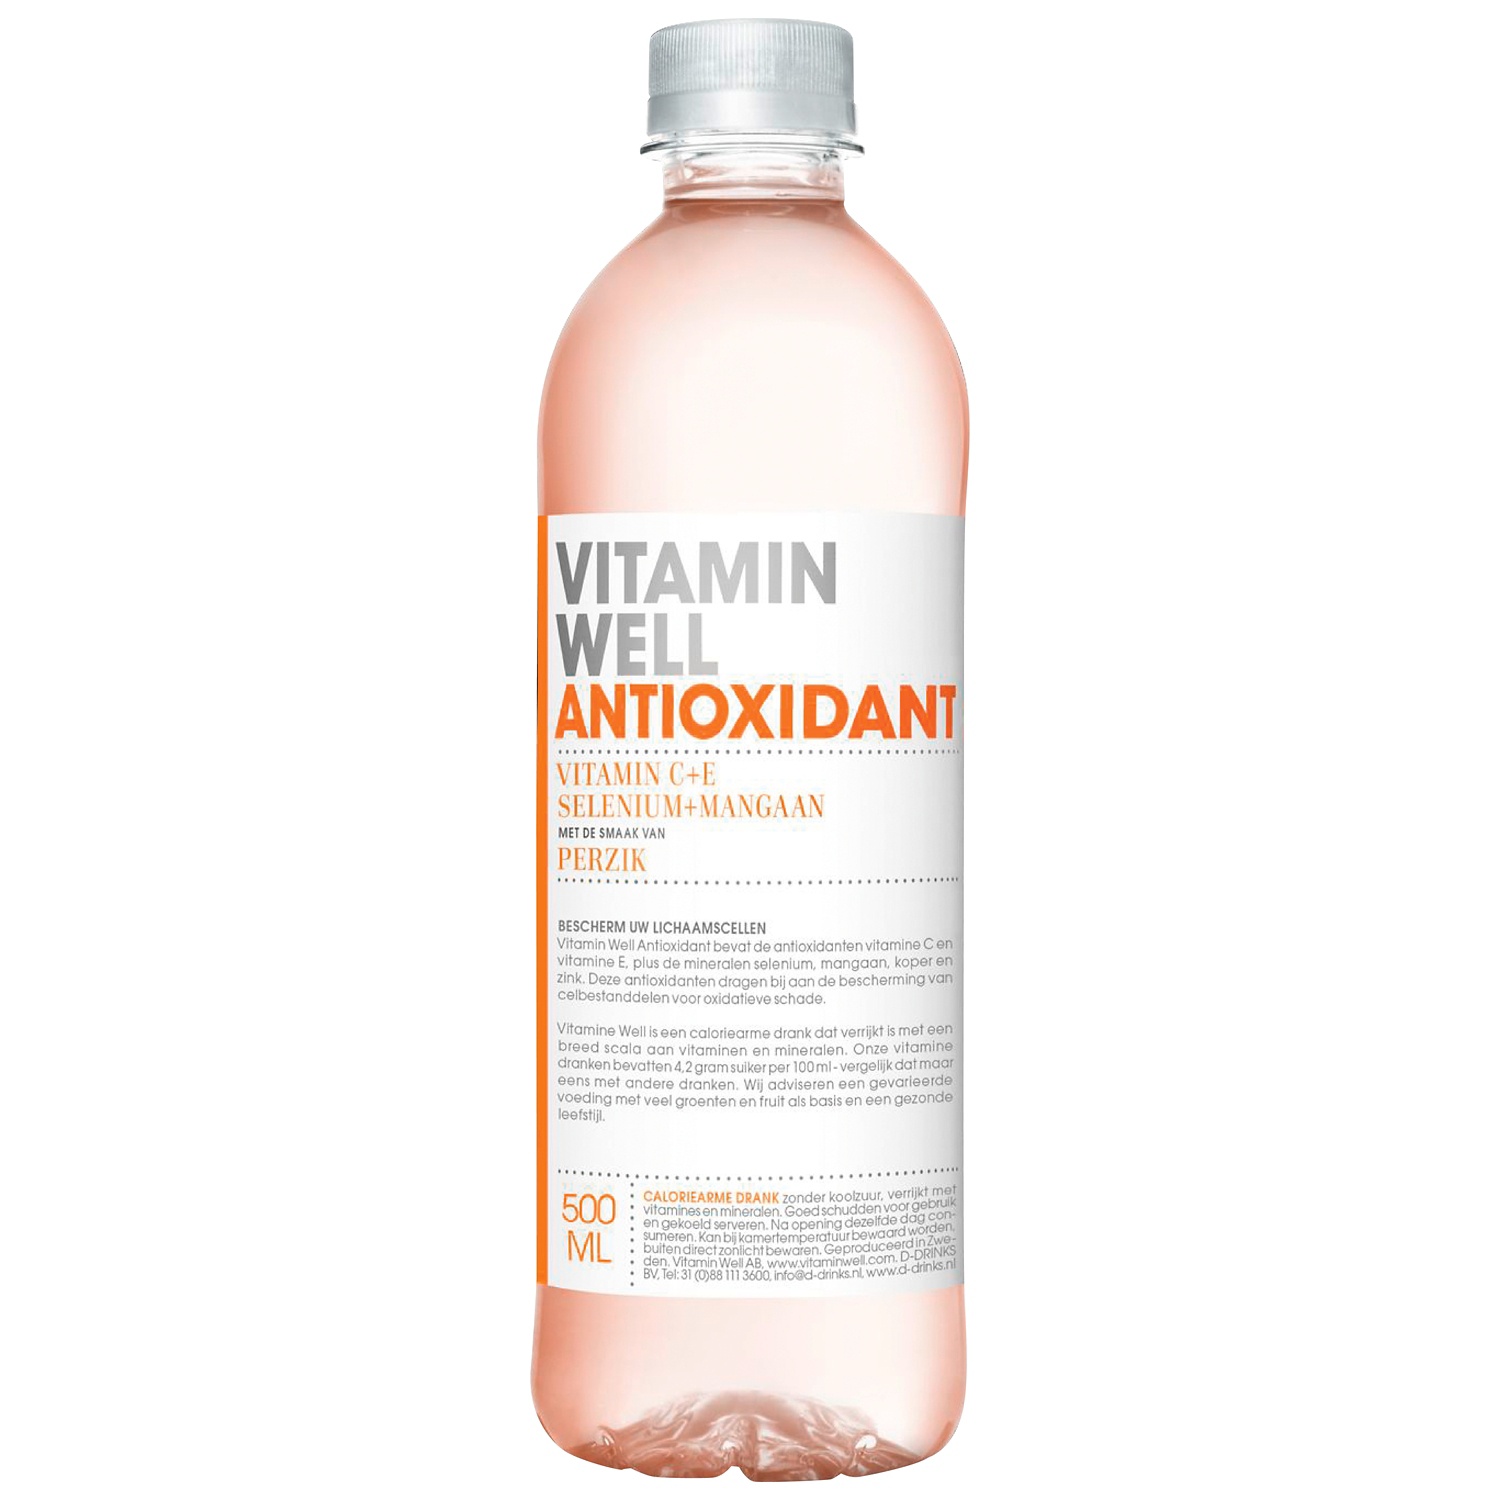 VITAMIN WELL, Antioxidant